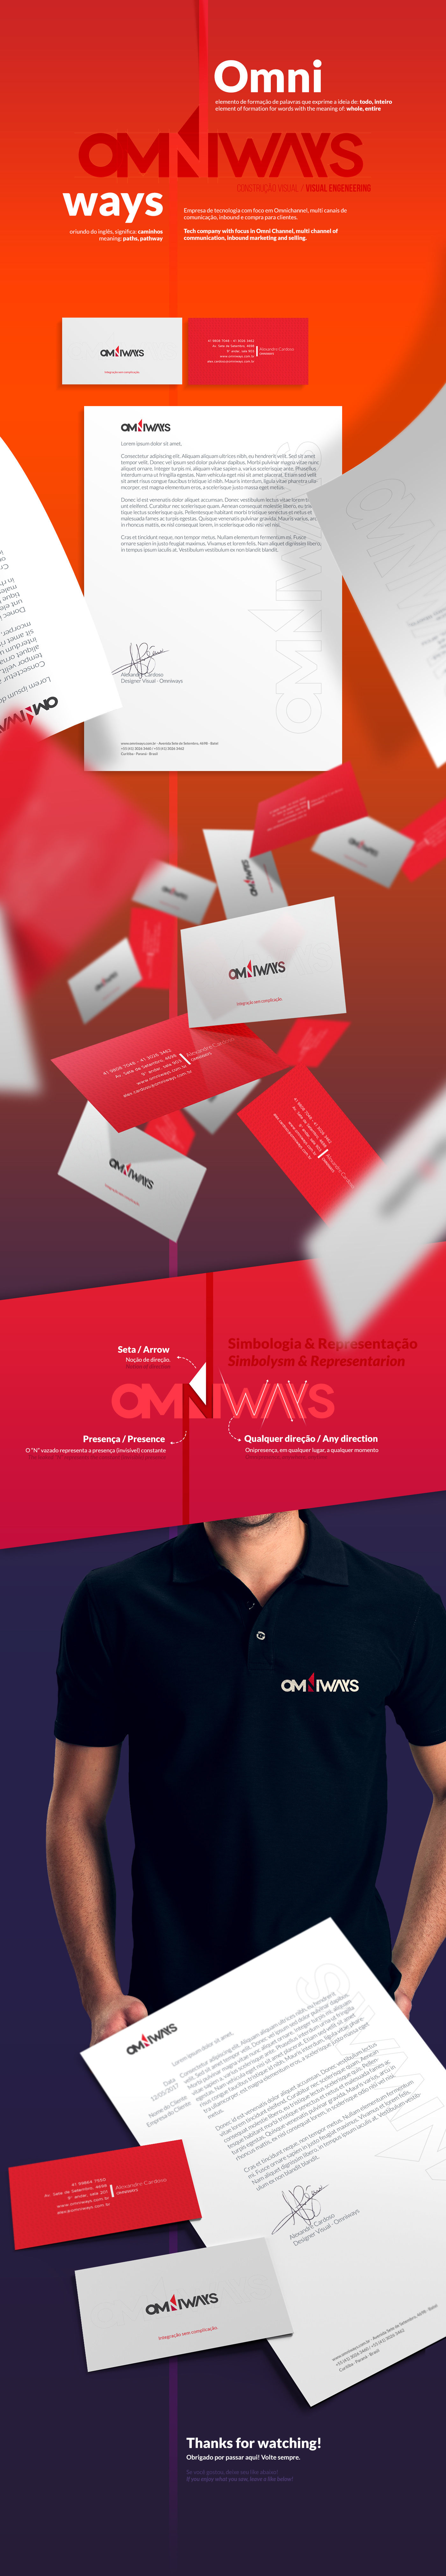 OMNI ways way apresentação presentation brand tech company tech mobile Internet